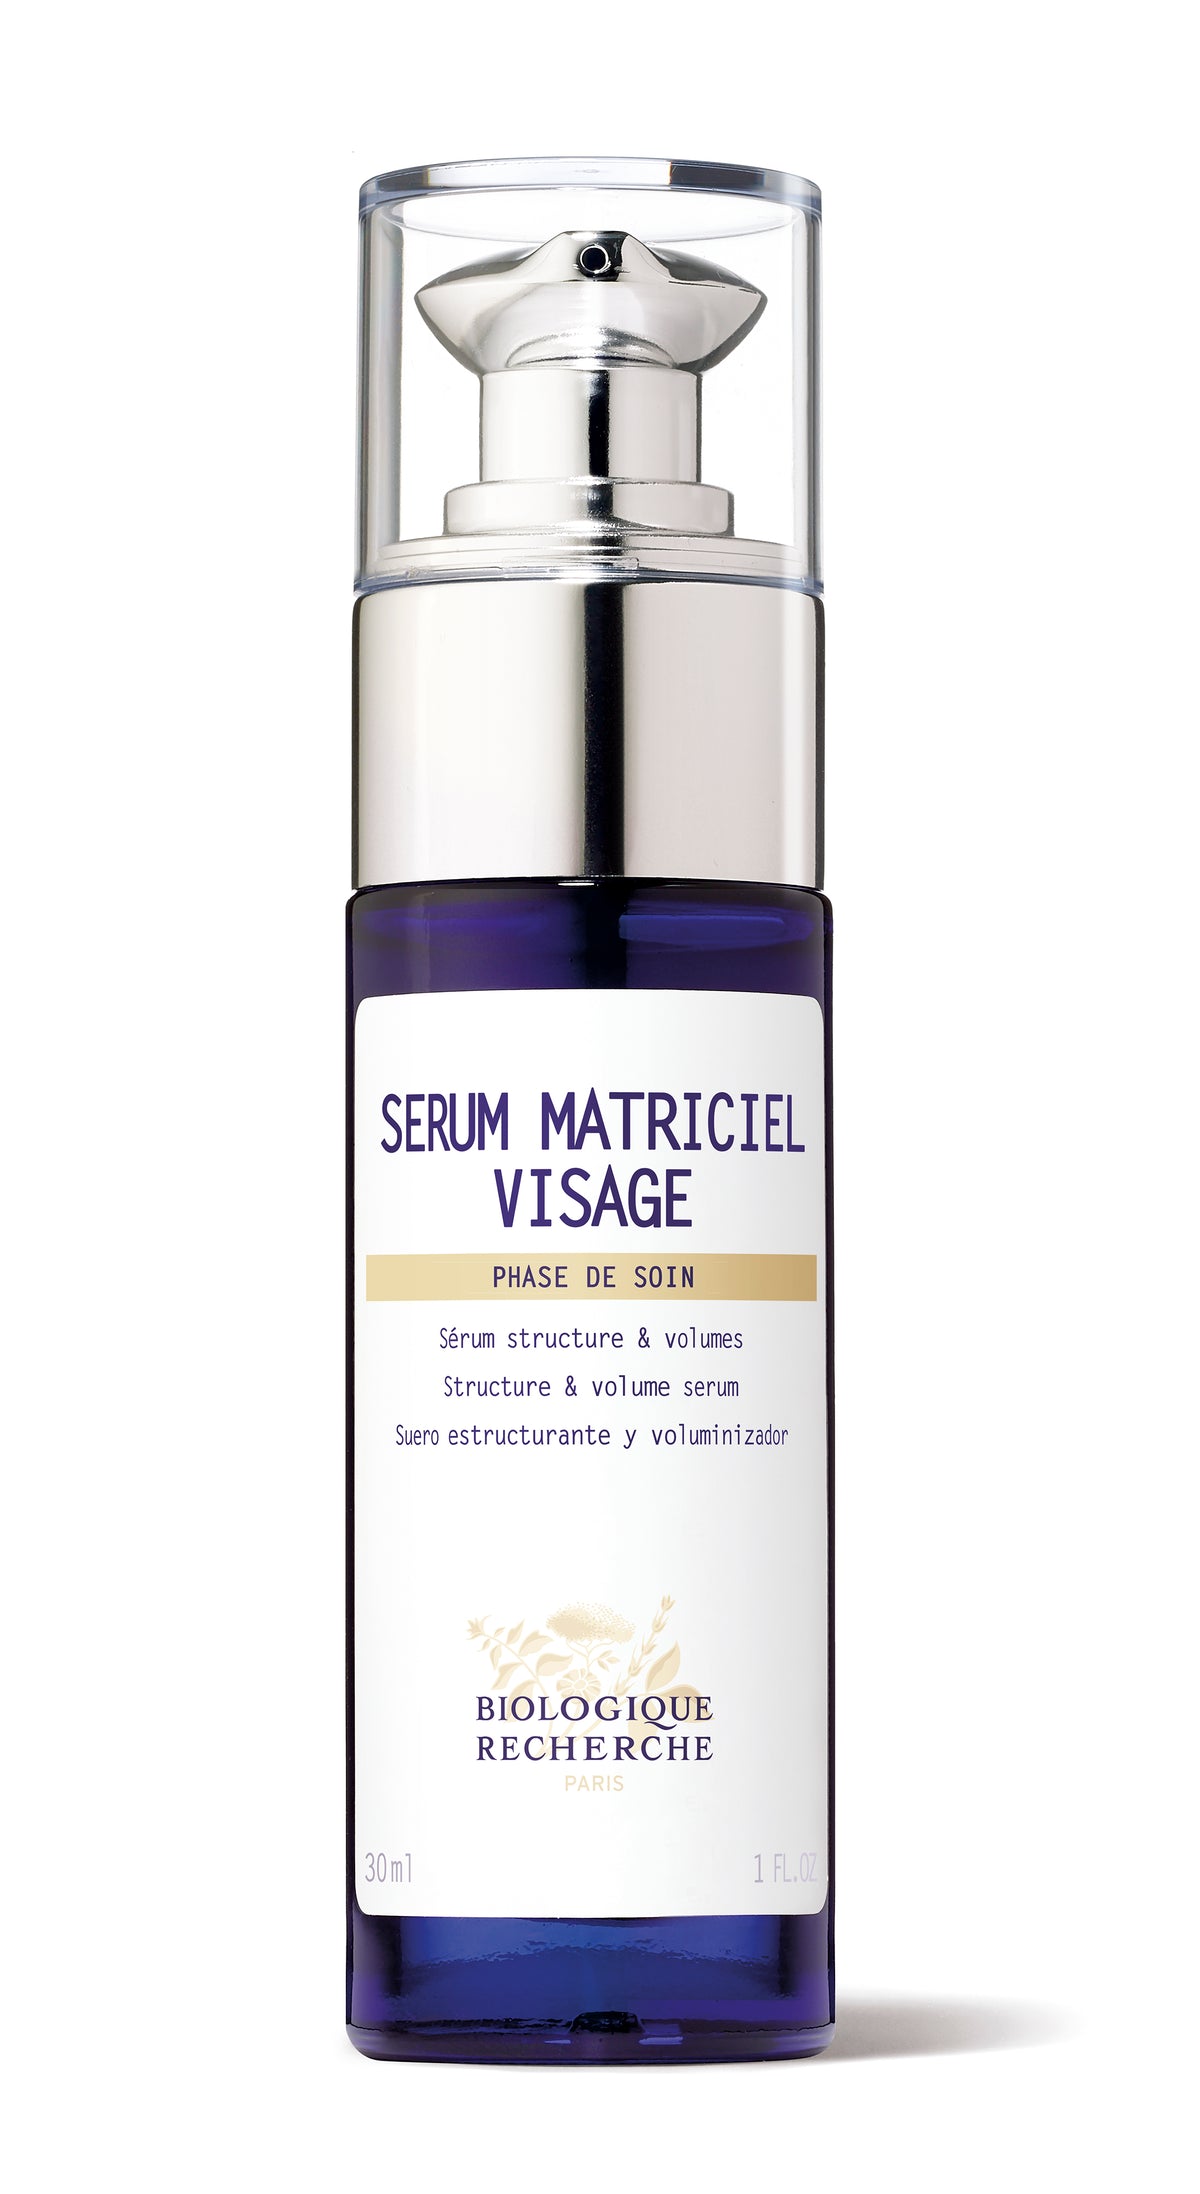 Sérum Matriciel Visage -- Targeted Serum ** Firming Lifting Facial Serum 1fl oz